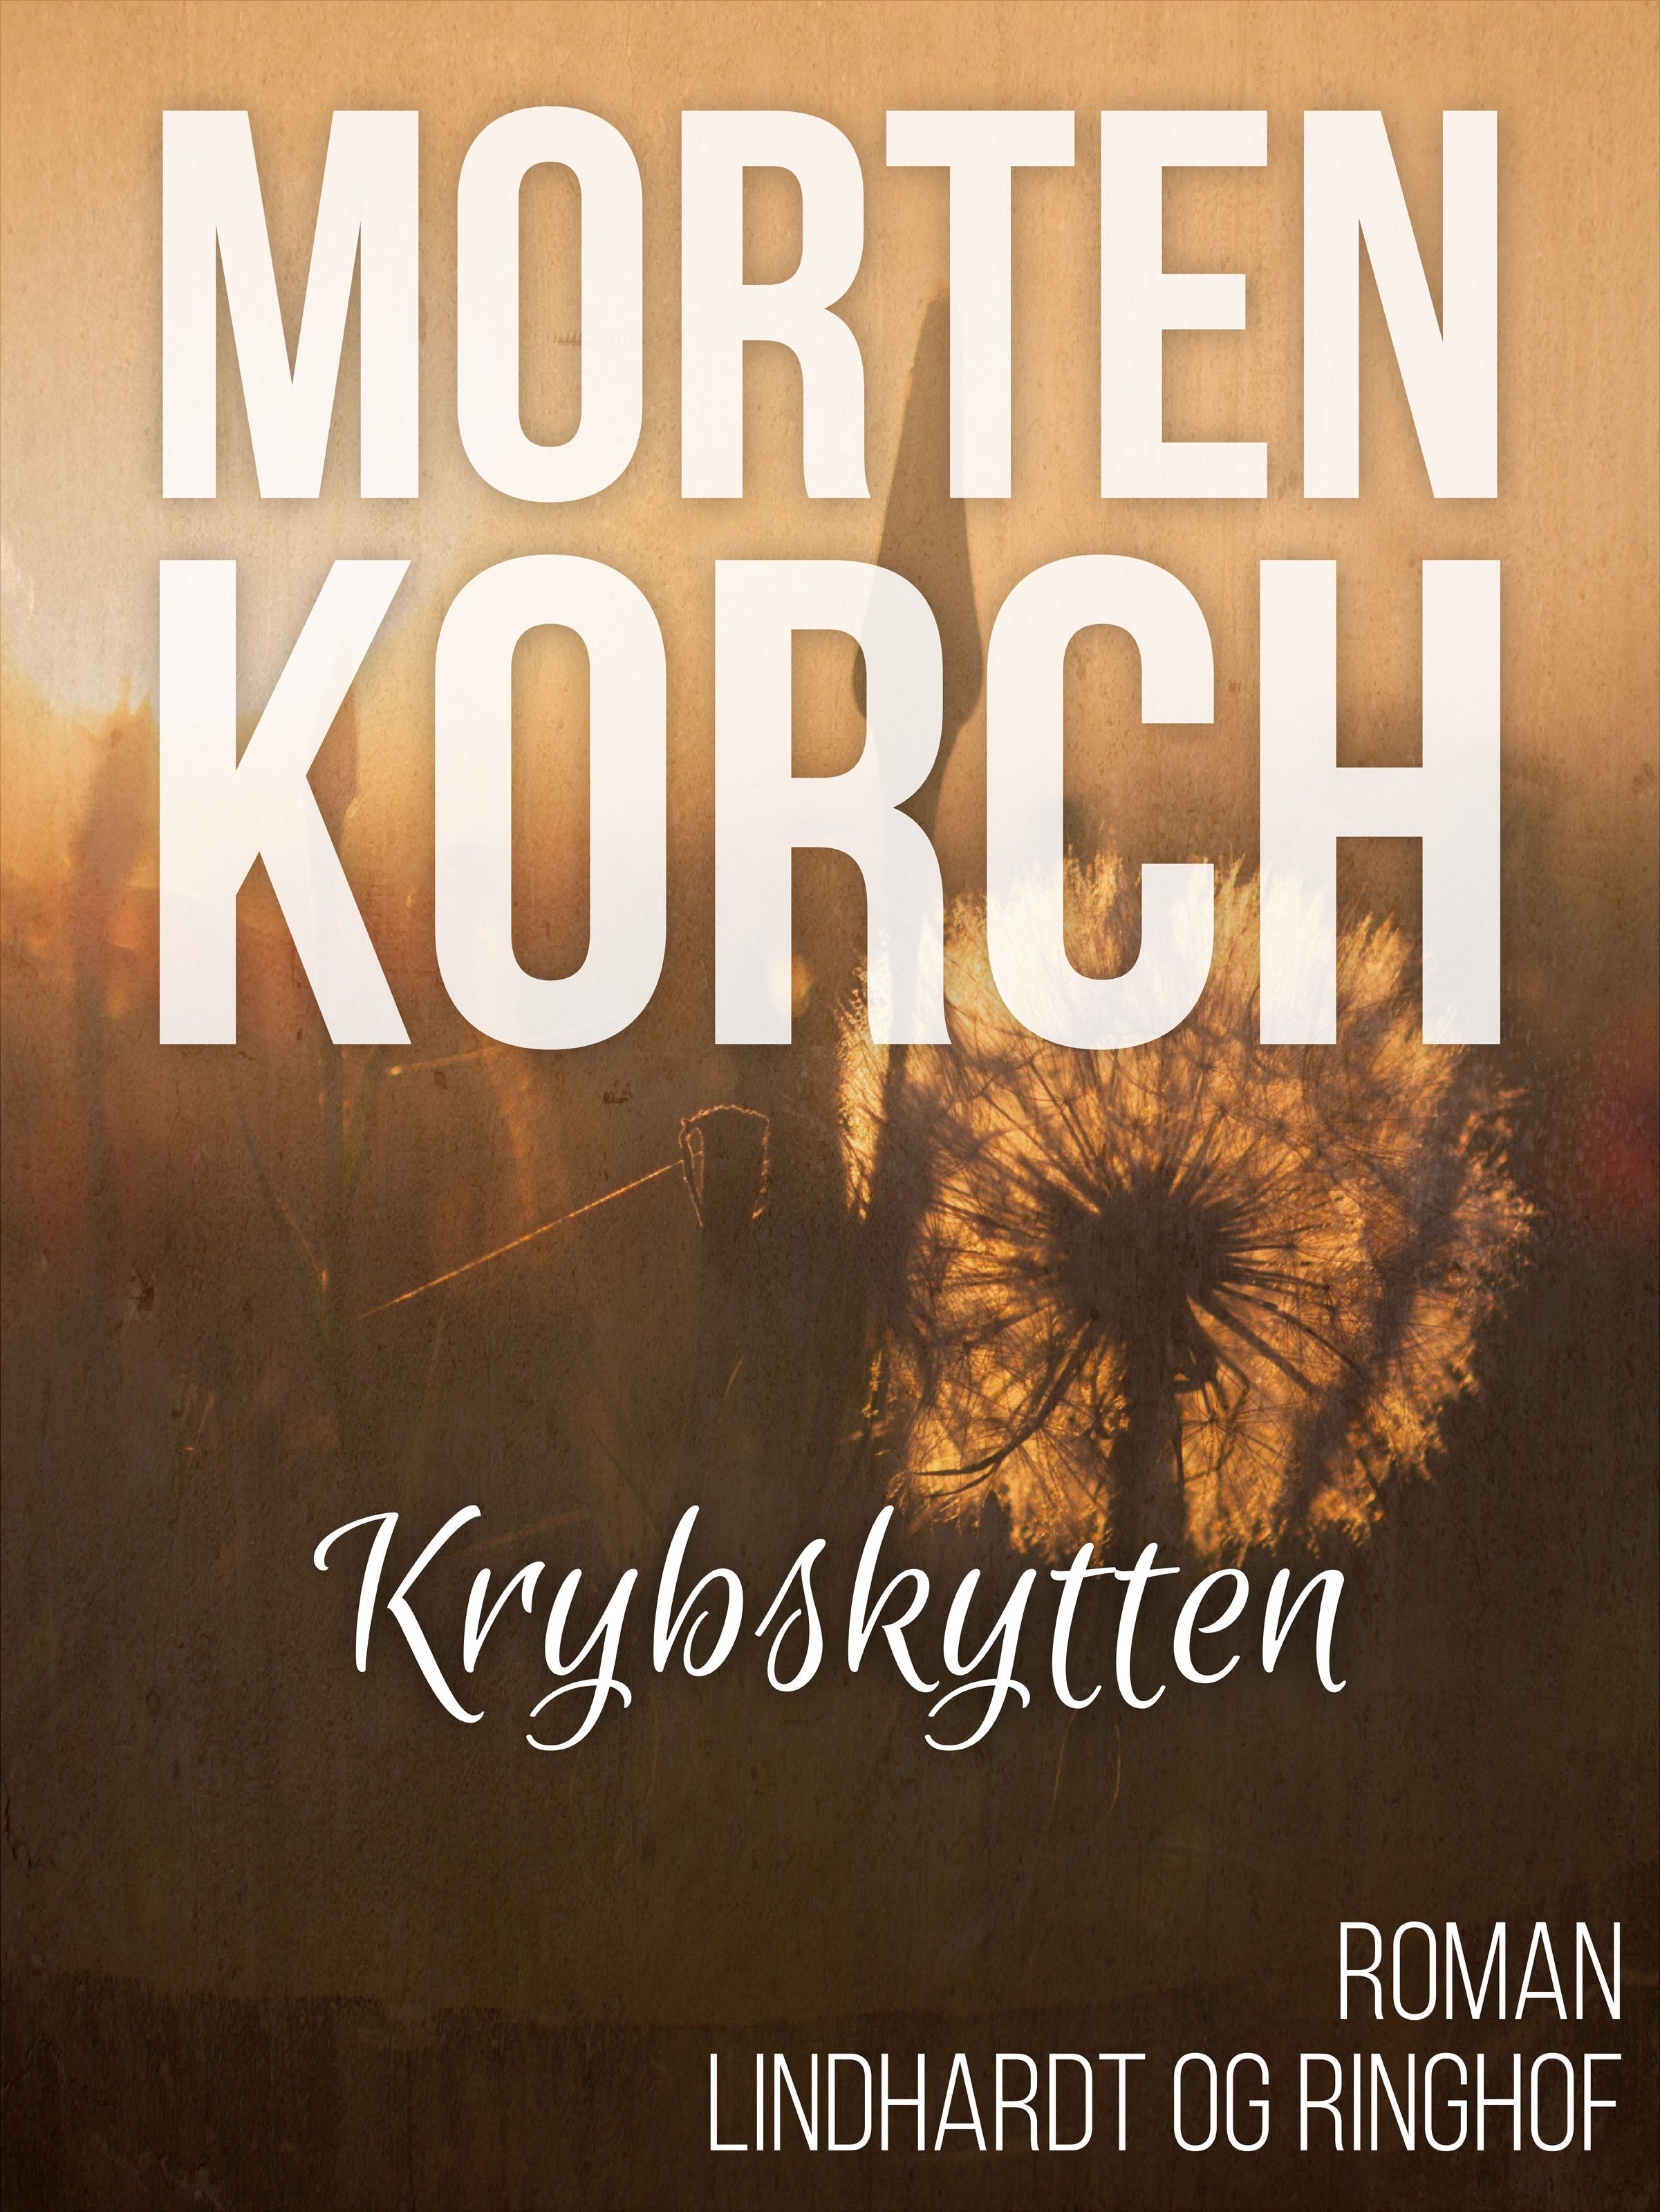 Krybskytten, lydbog af Morten Korch